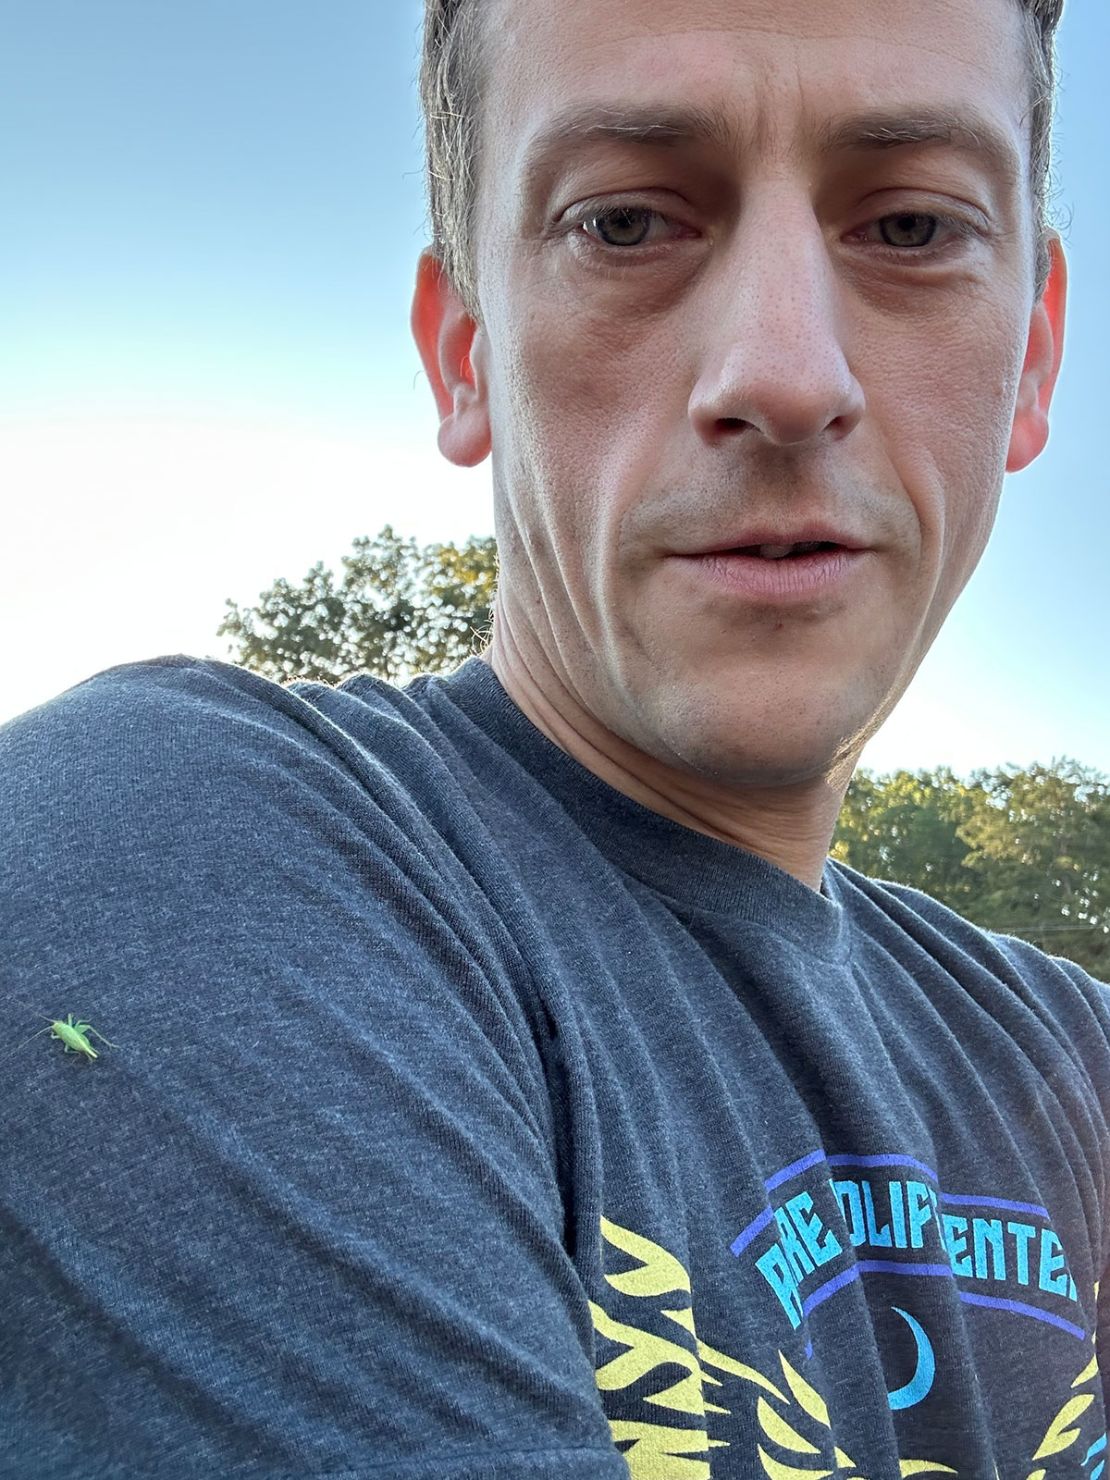 CNN senior writer Thomas Lake takes a photo with a bug on his shirt following a 5K.